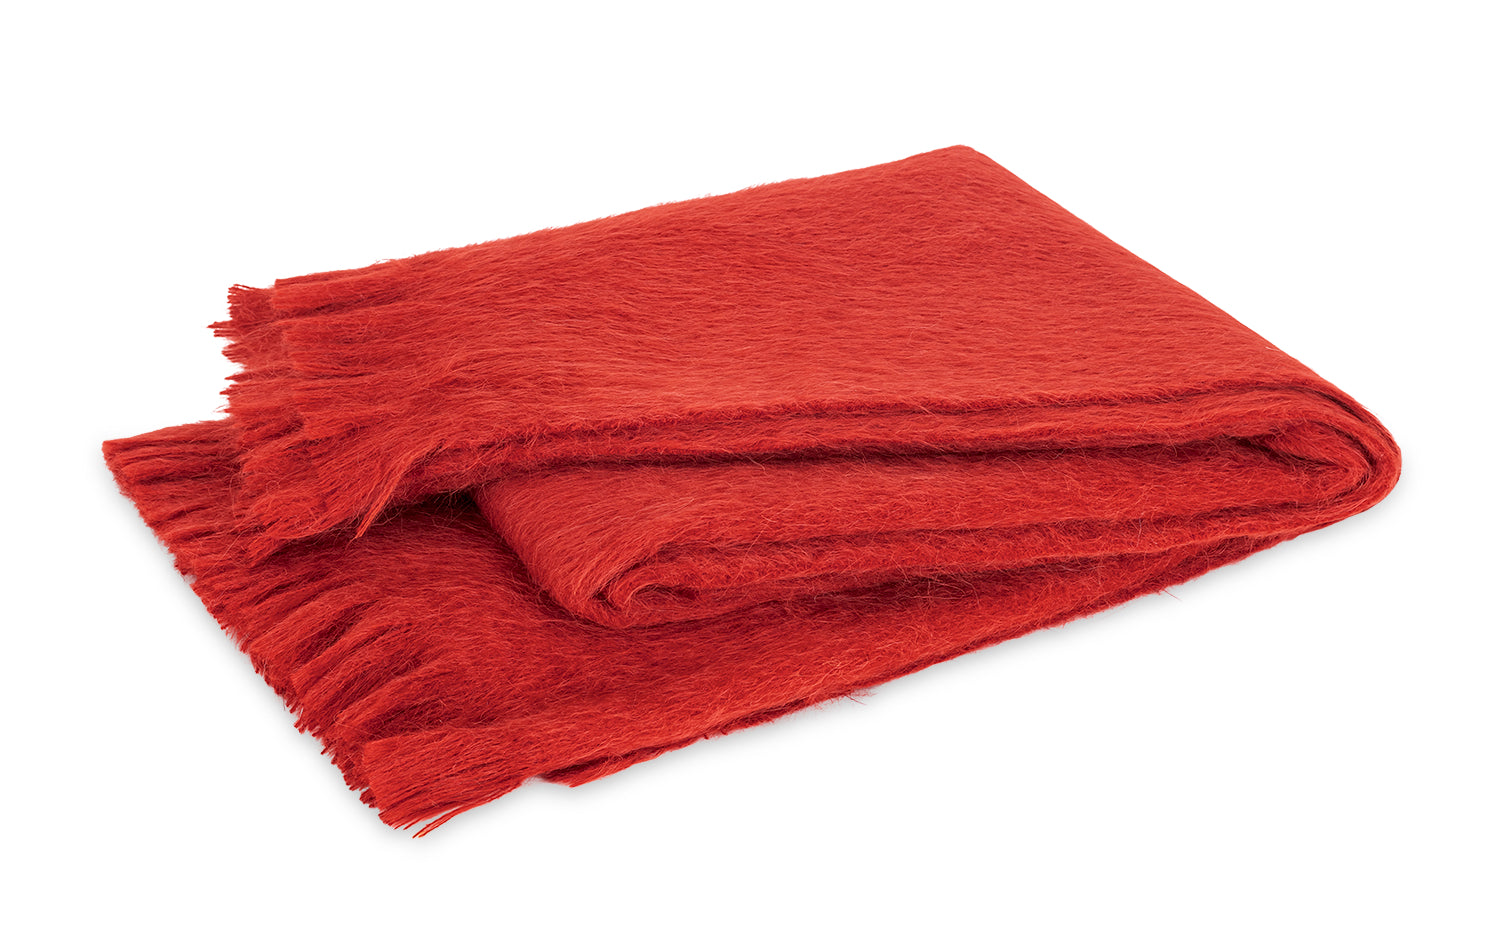 Throw Blanket - Bruno Carnelian Red Alpaca Throw by Matouk